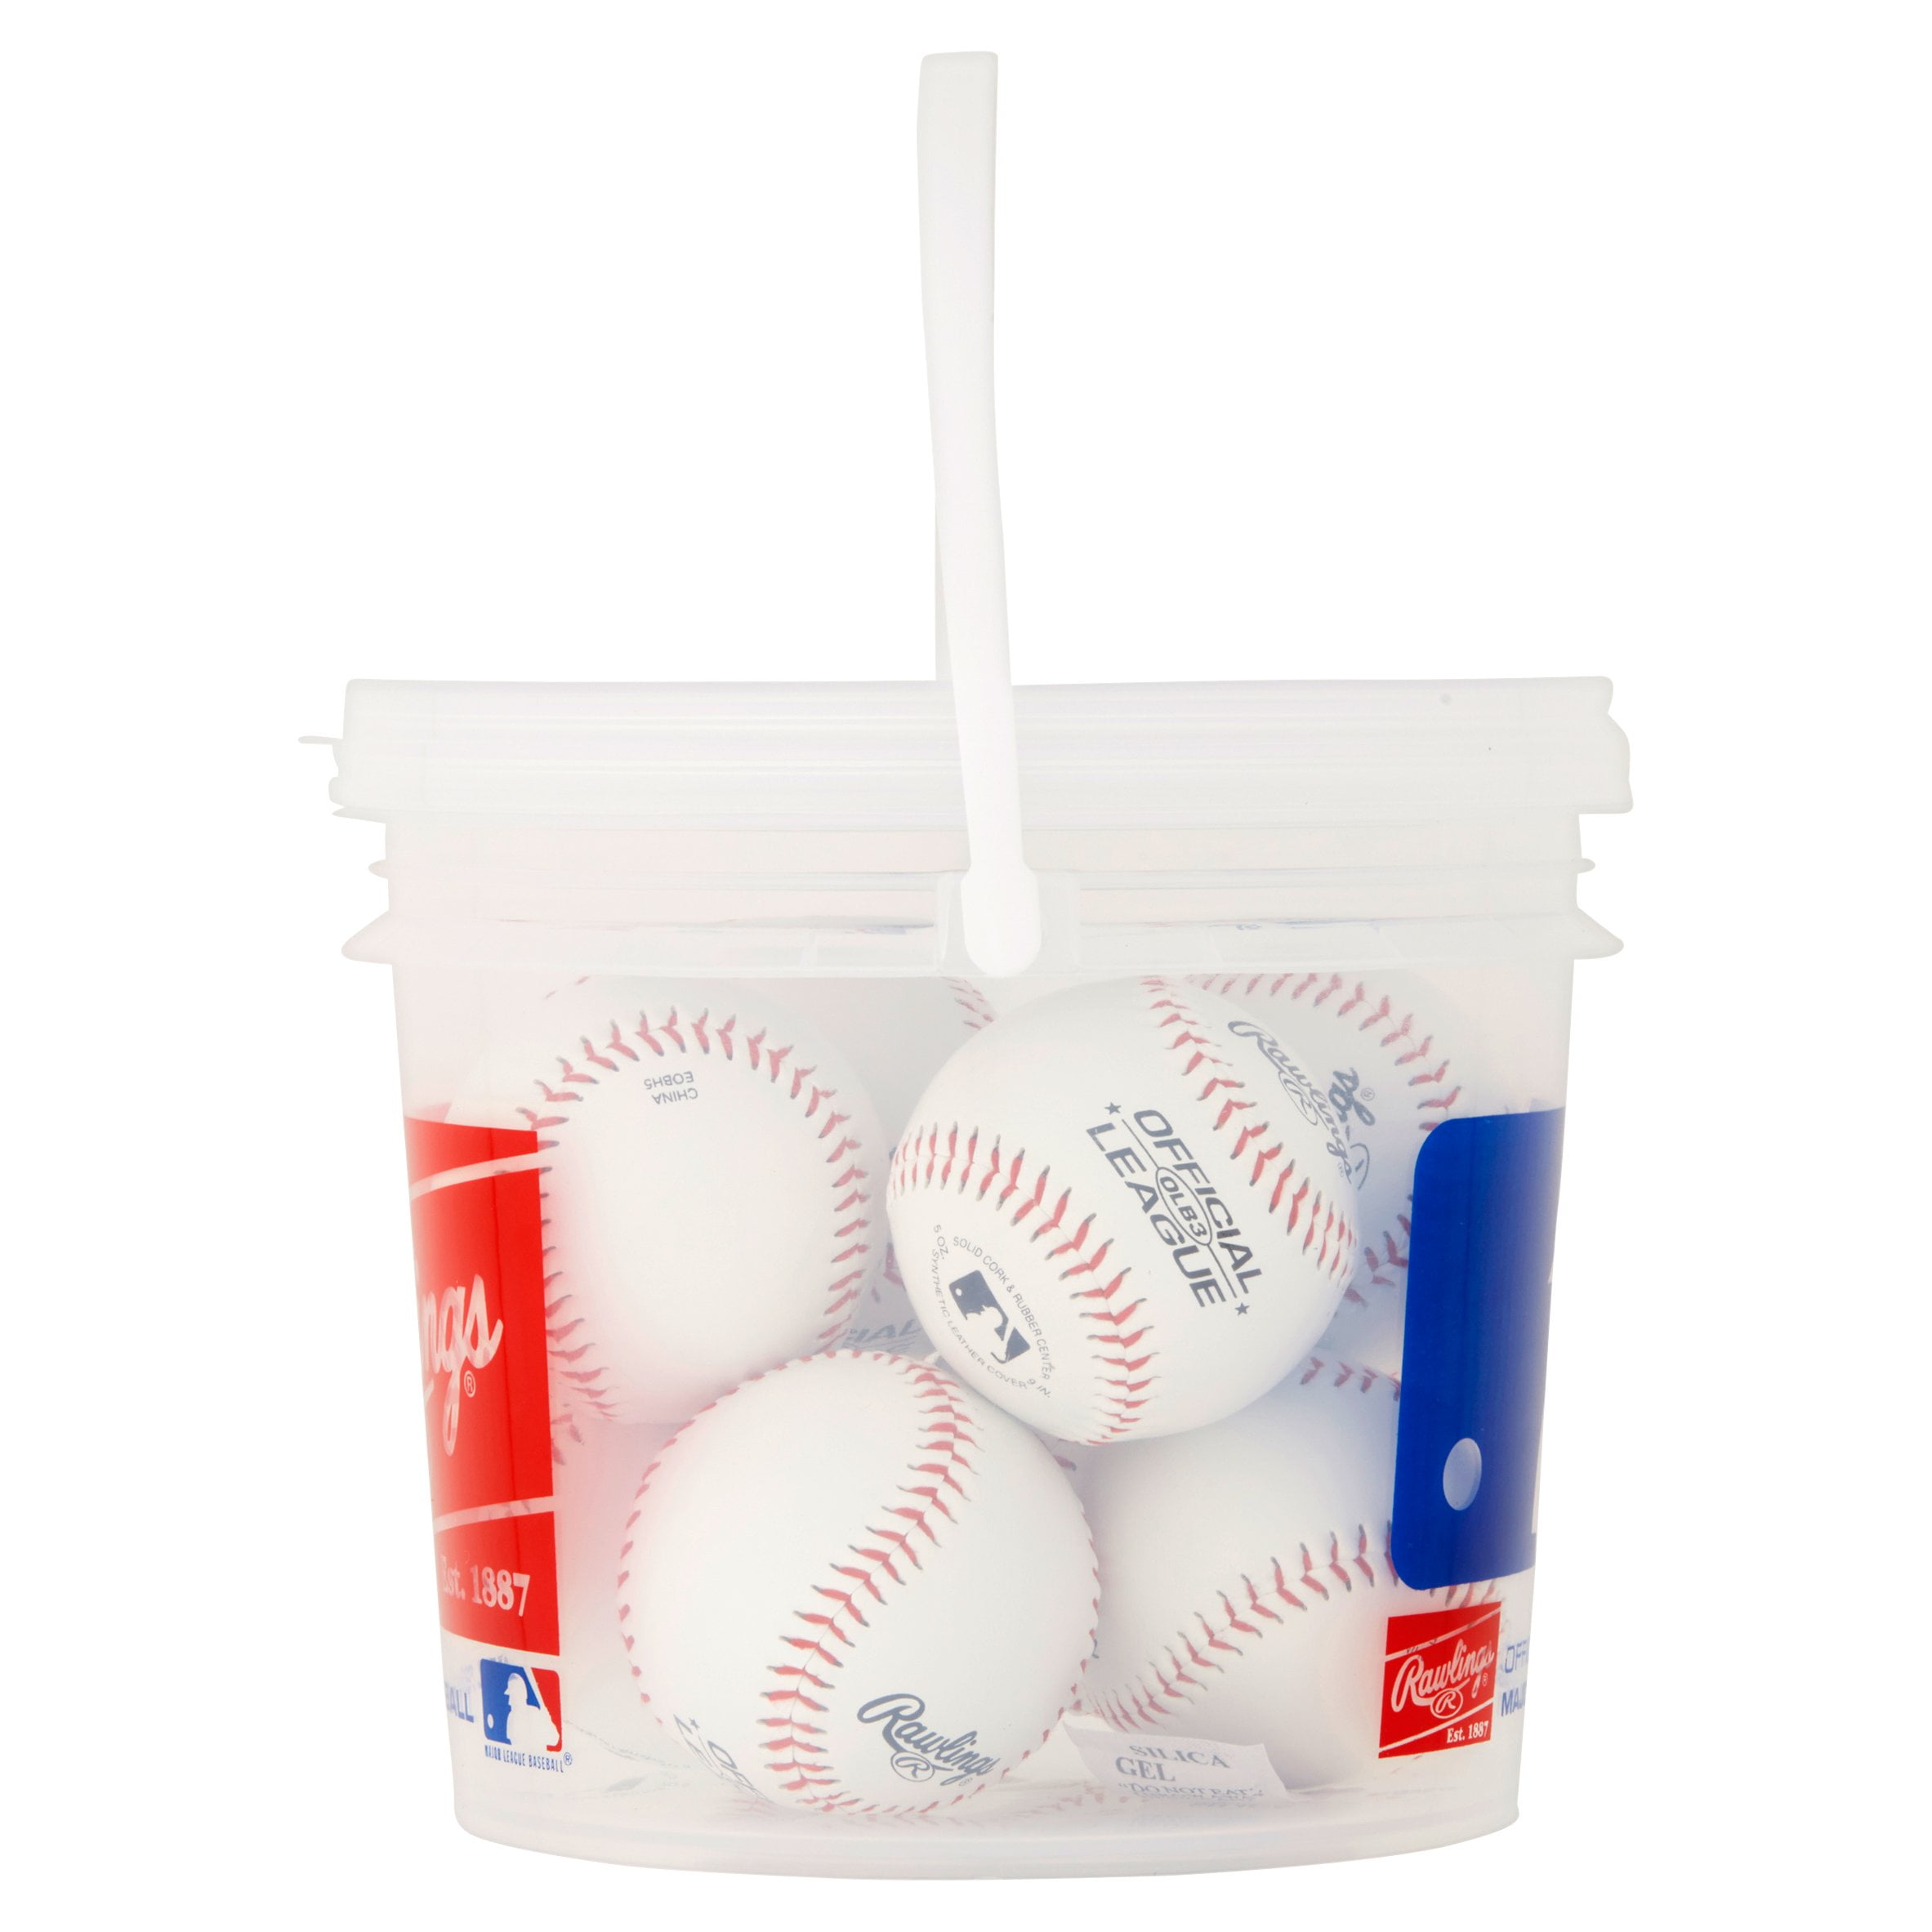 Rawlings Baseballs Olb3 Recreational Play Bucket of 8 for sale online 